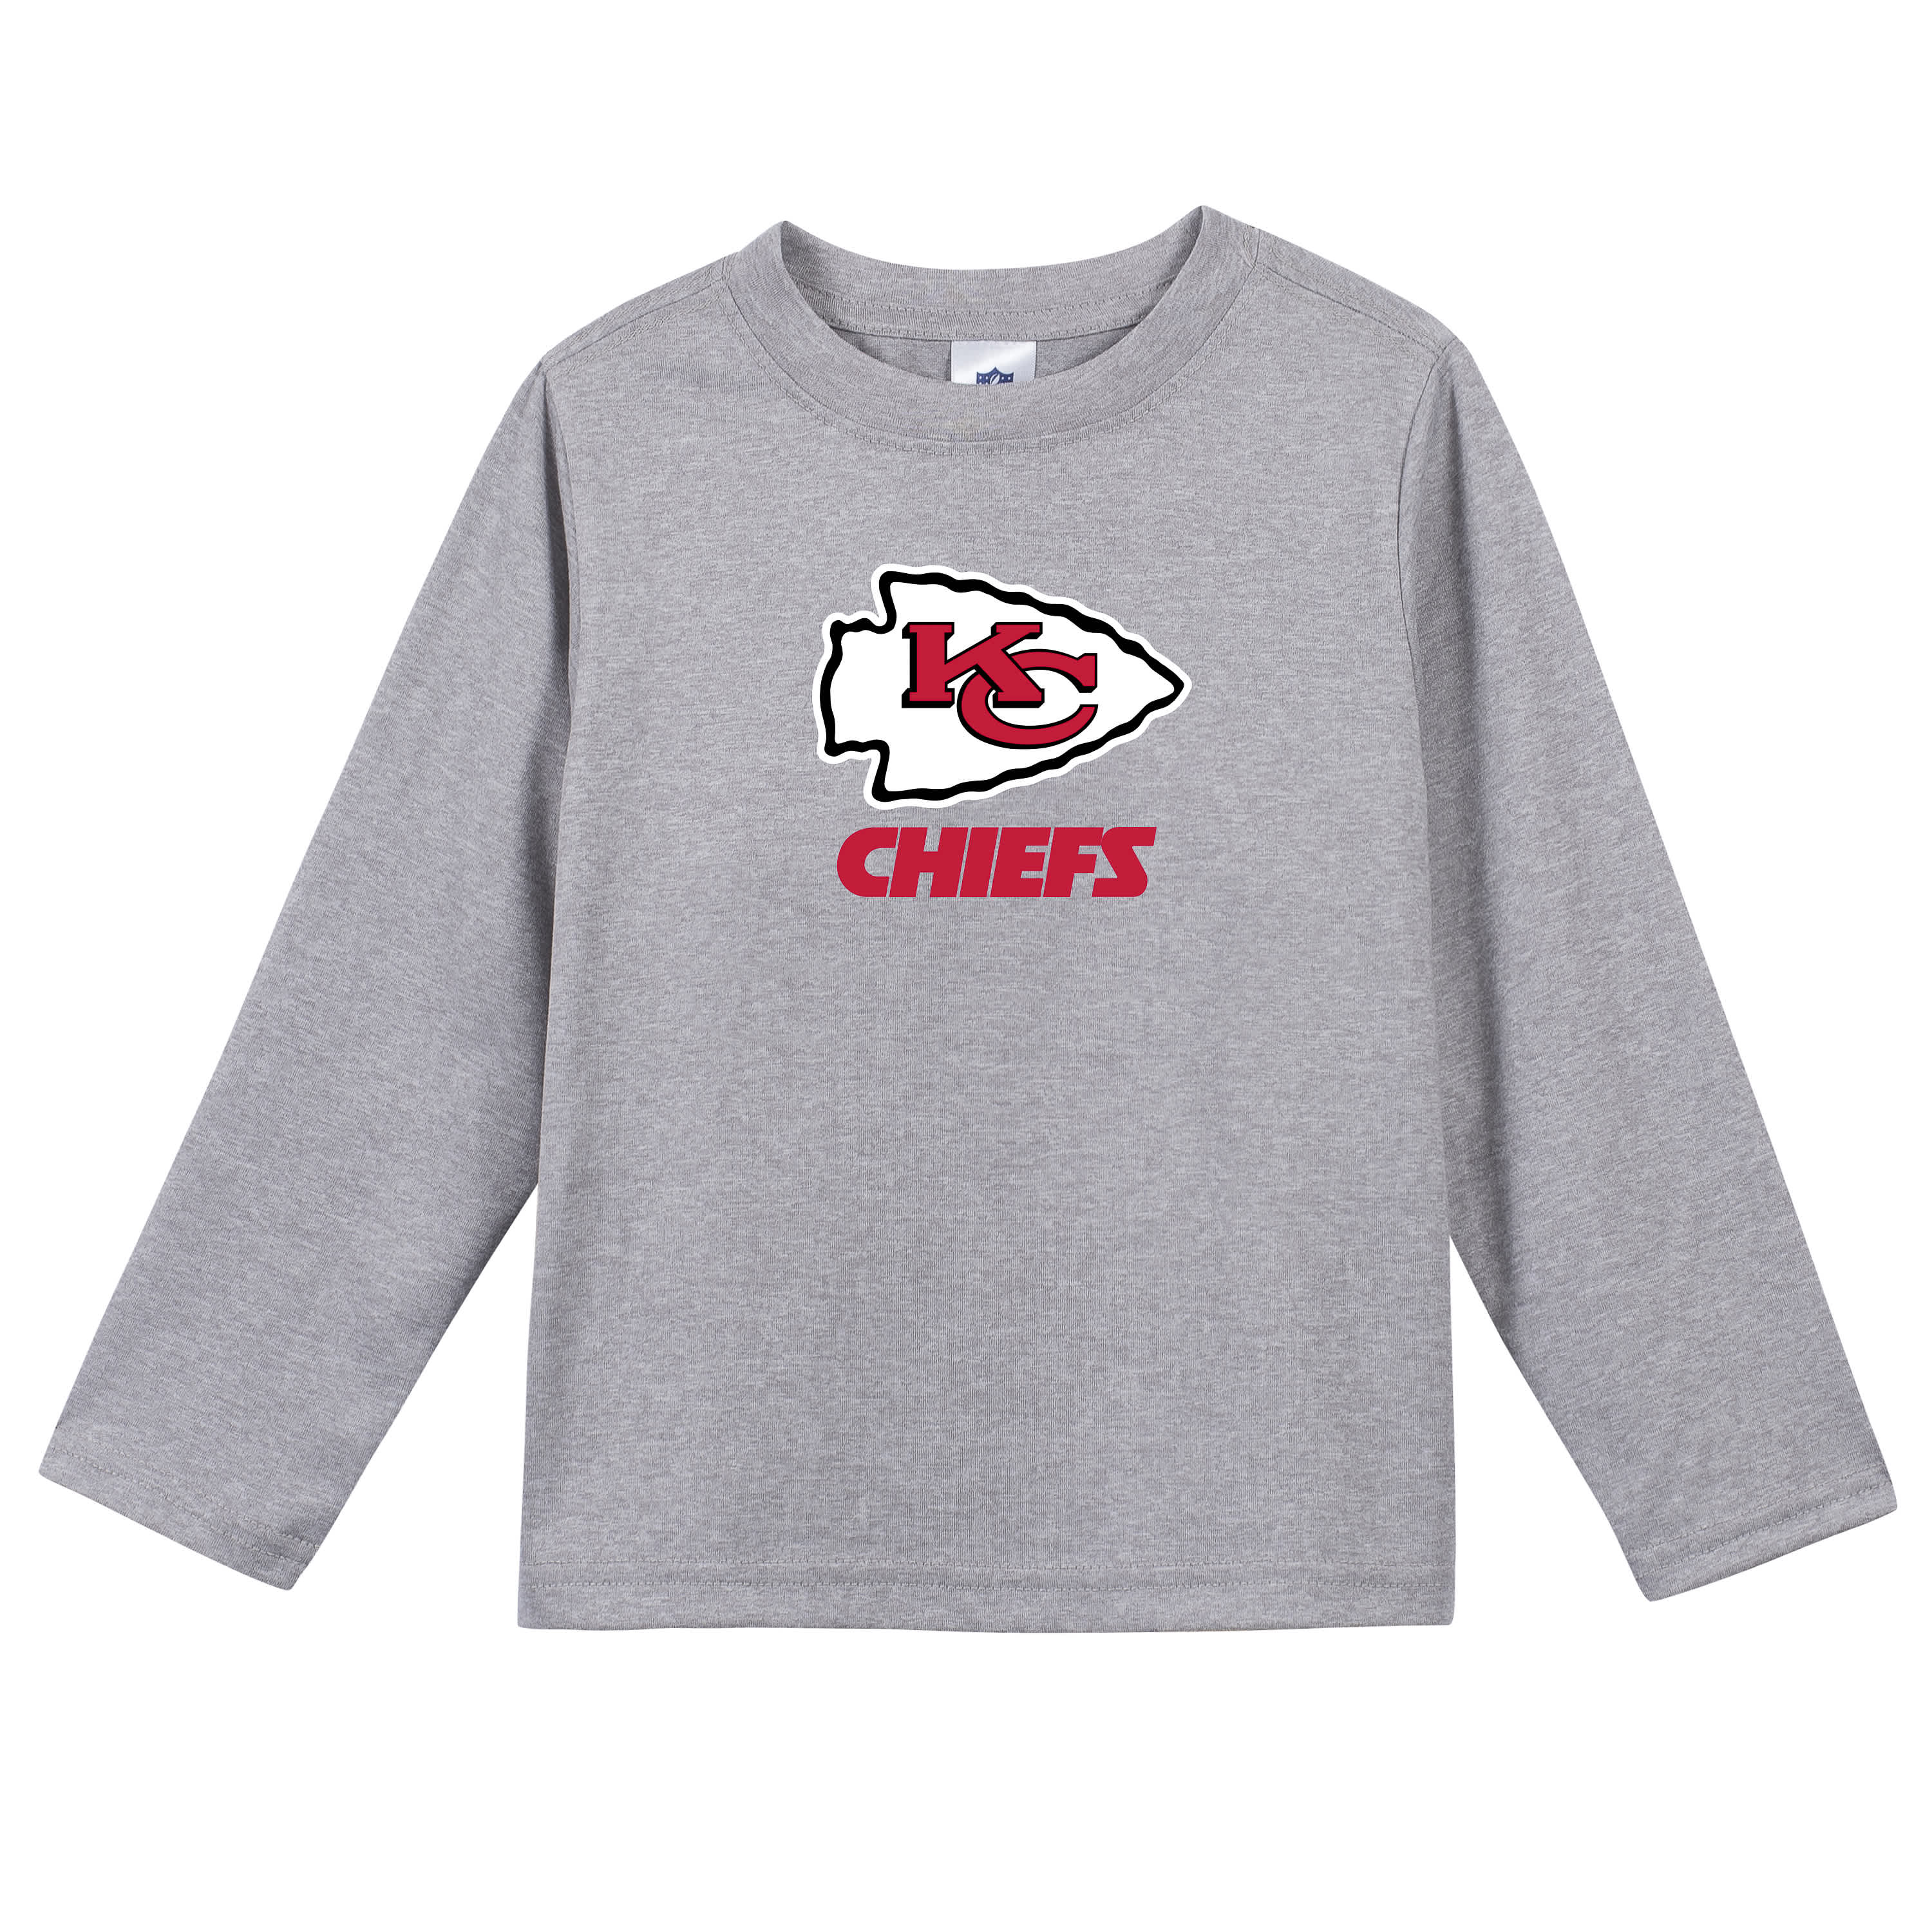 Junk Food clothing x NFL - Kansas city chiefs - Bold Logo - Mens and Womens  Short Sleeve Fan Shirt - Size 2 X-Large 